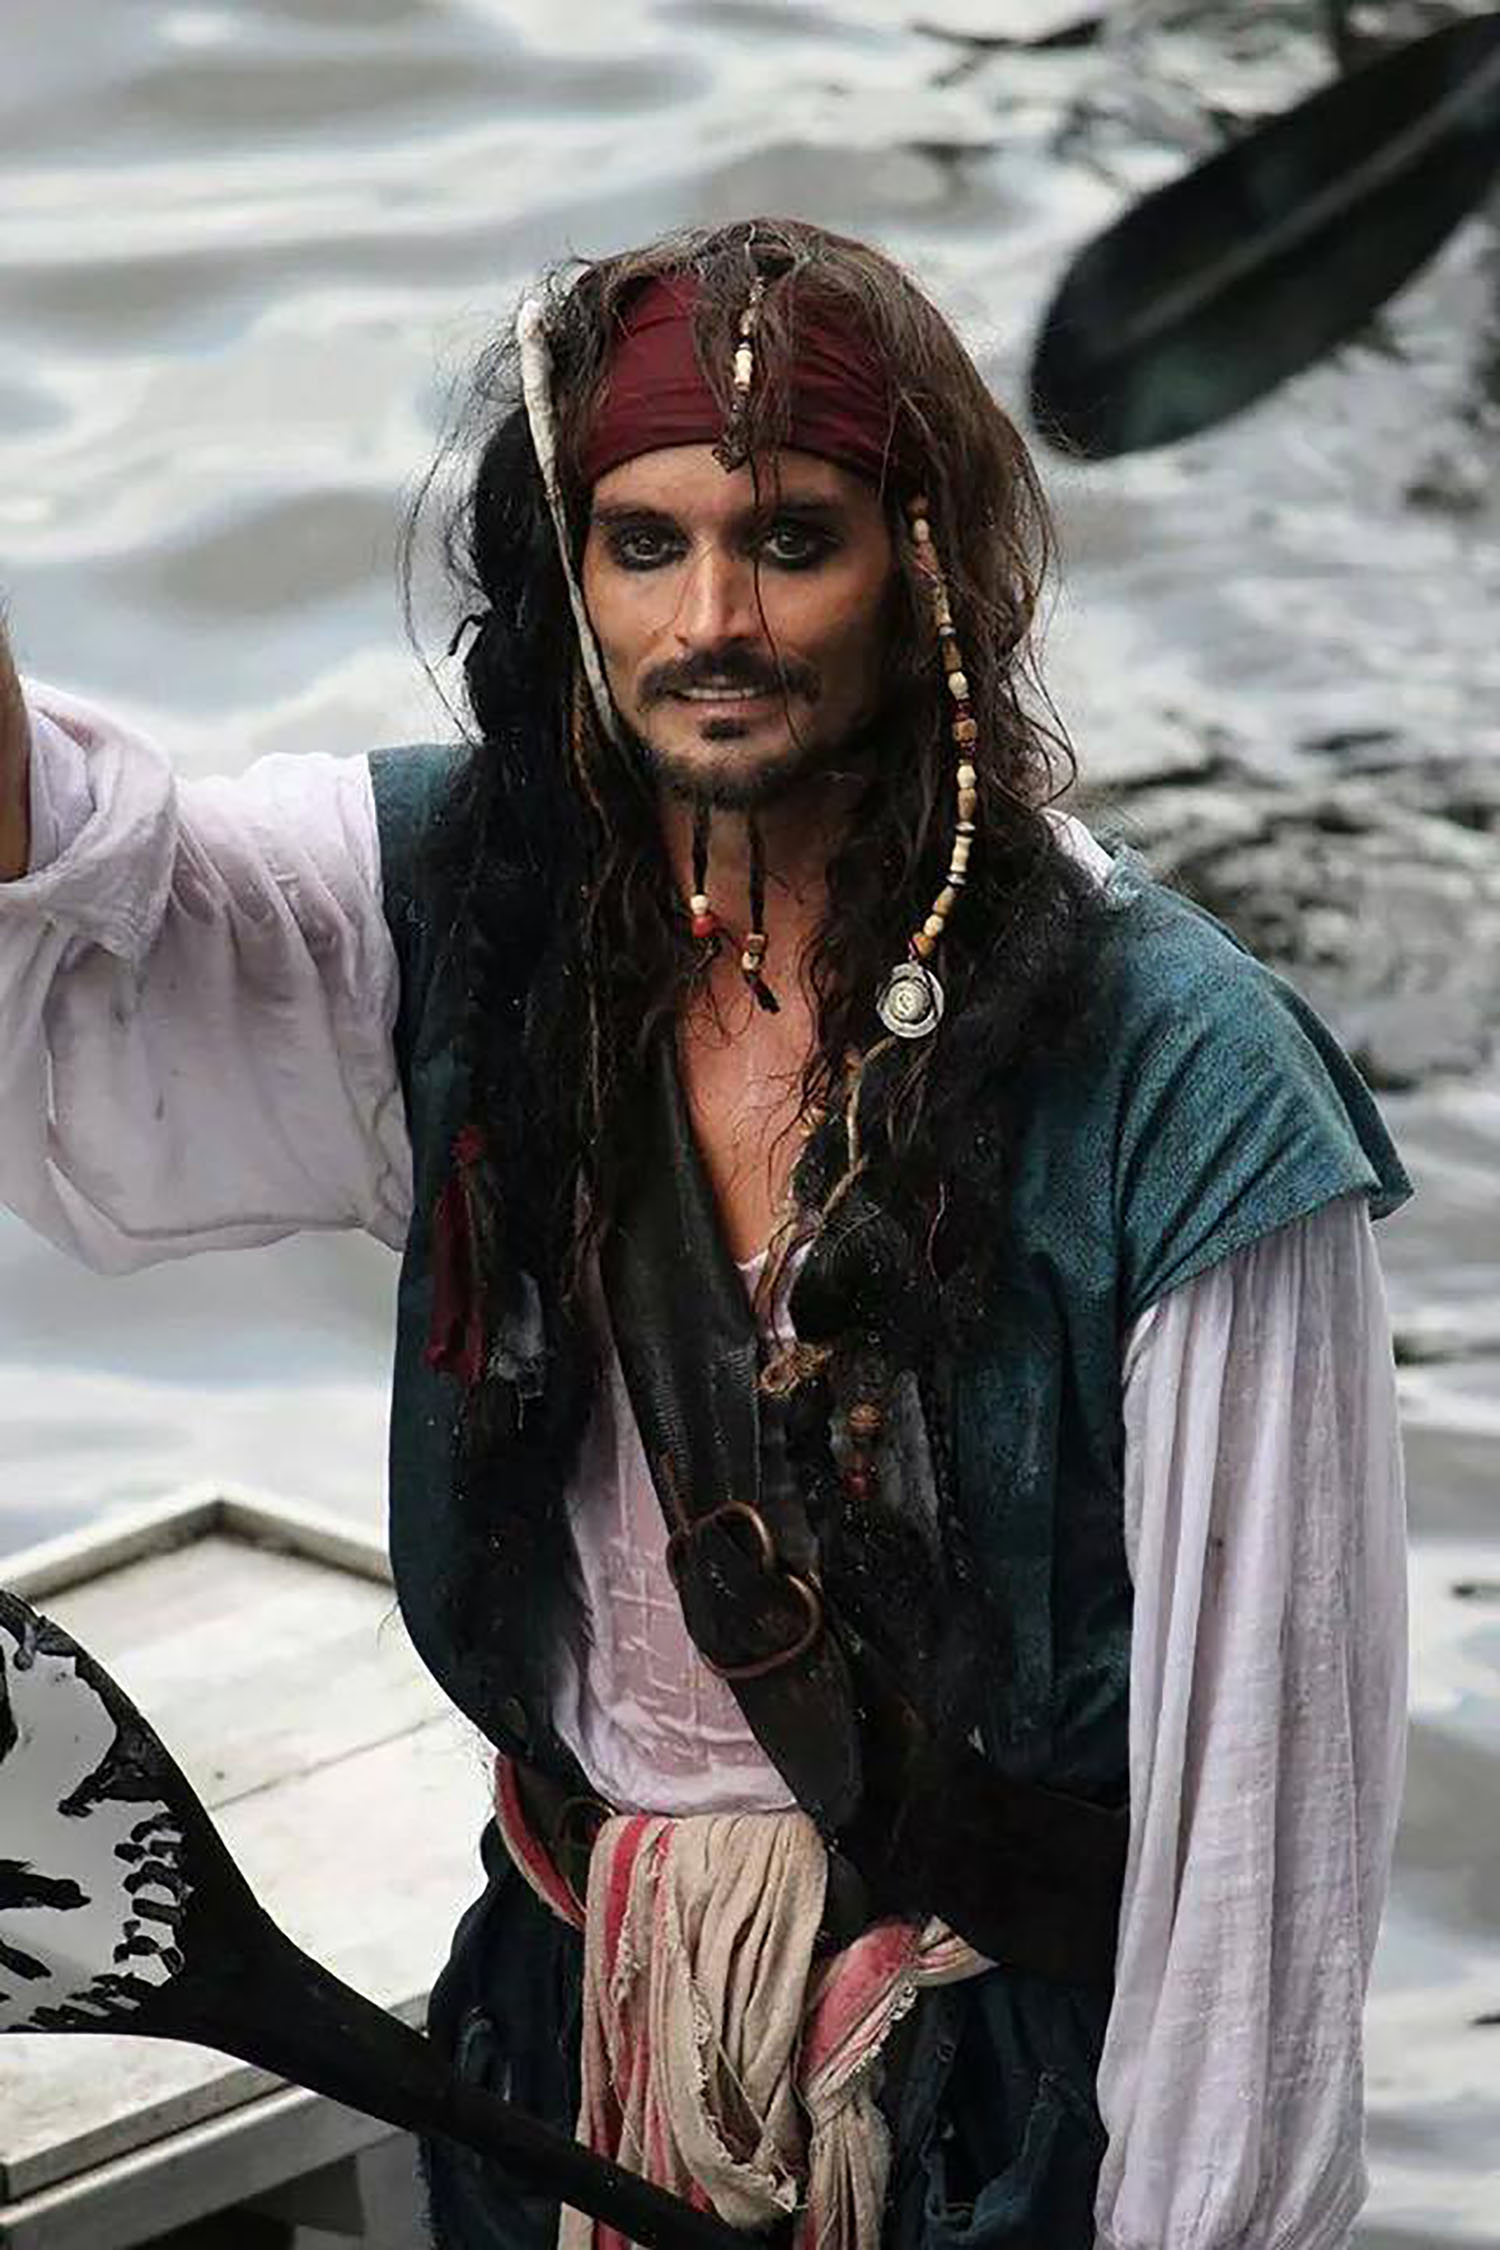 Joshua Hensley enjoyed dressing up as Captain Jack Sparrow